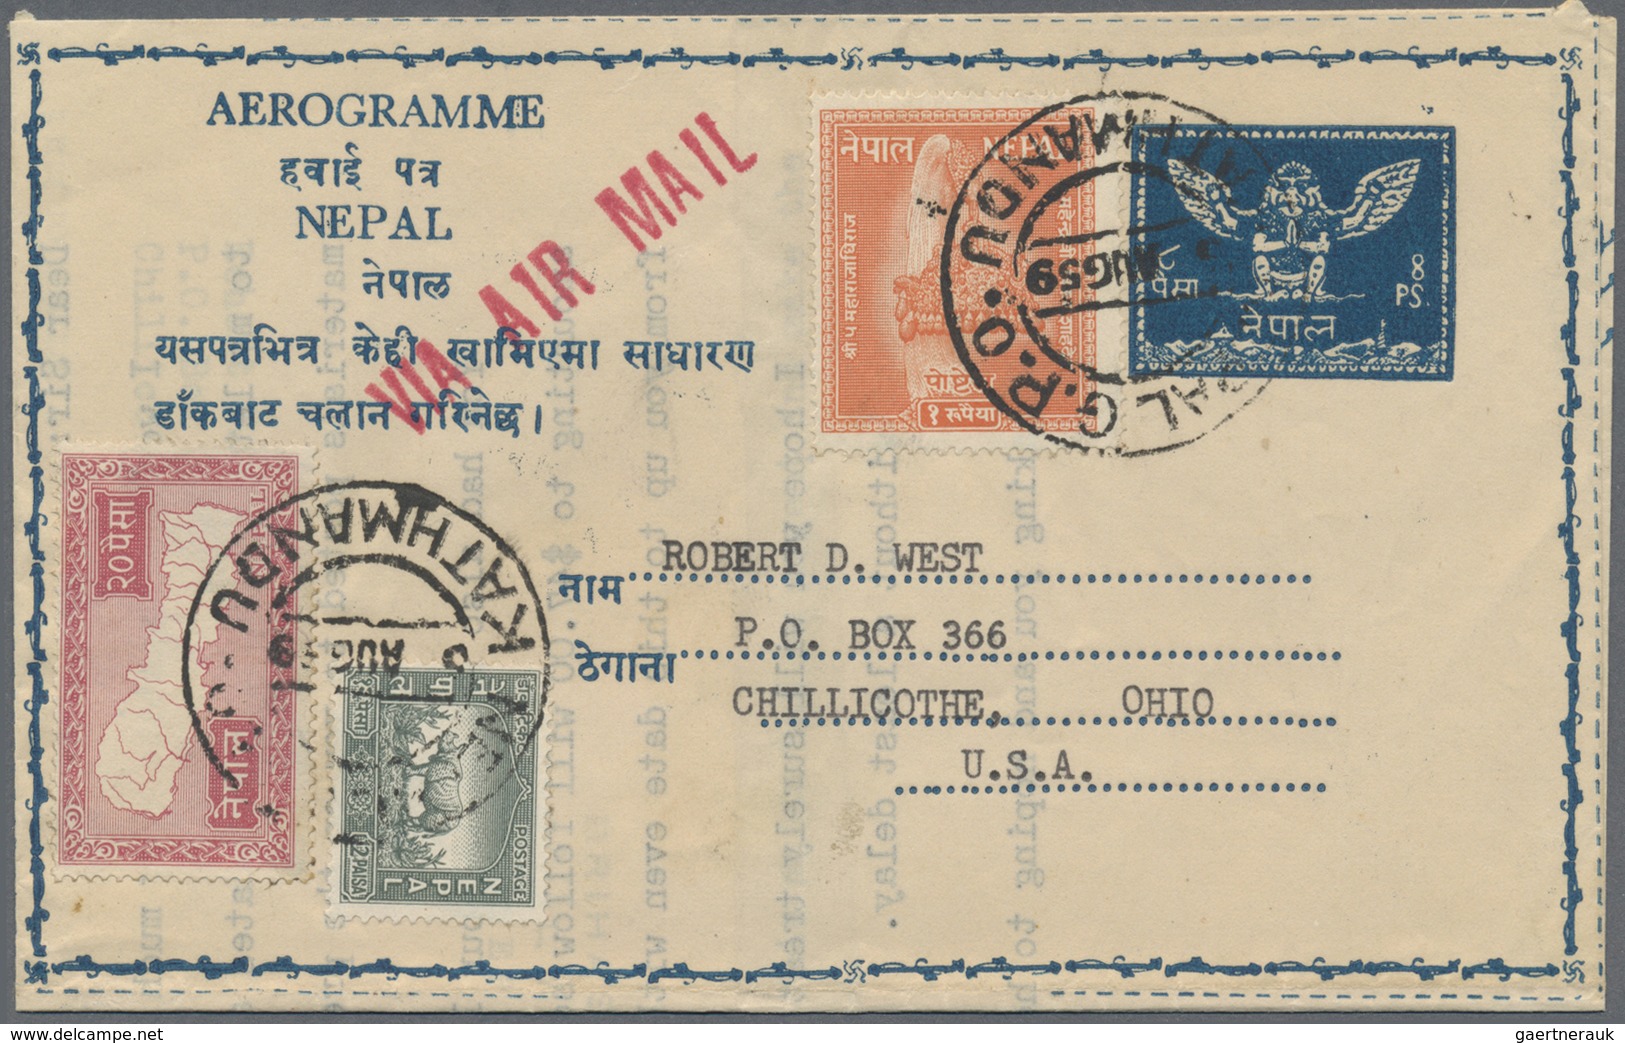 GA Nepal: 1959 First Aerogramme 8p. Blue, Type 4, Used From Kathmandu To Chillicothe, Ohio, USA "VIA AI - Nepal